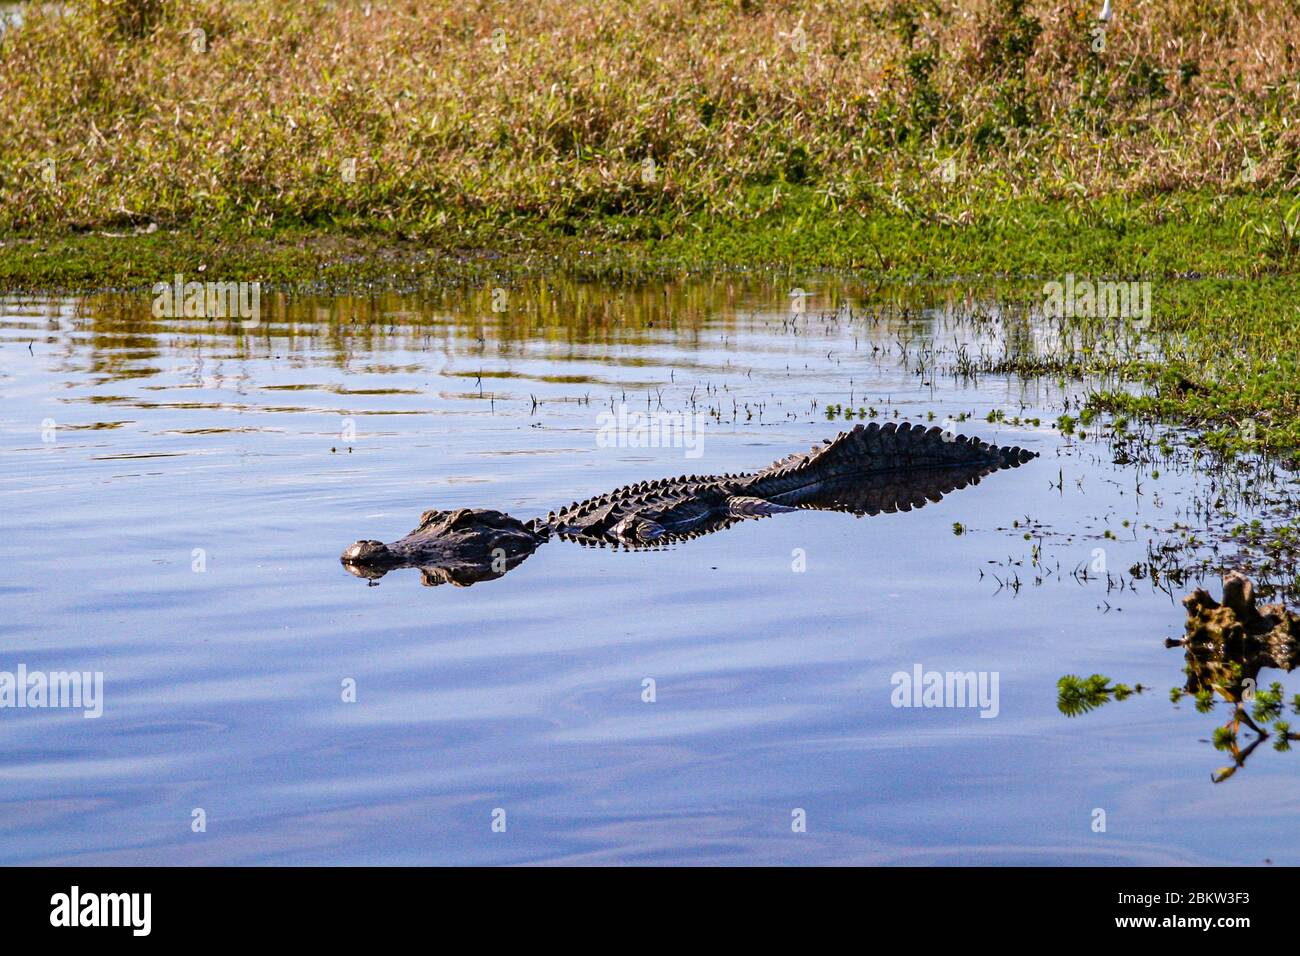 Alligator floats in calm marsh water Stock Photo